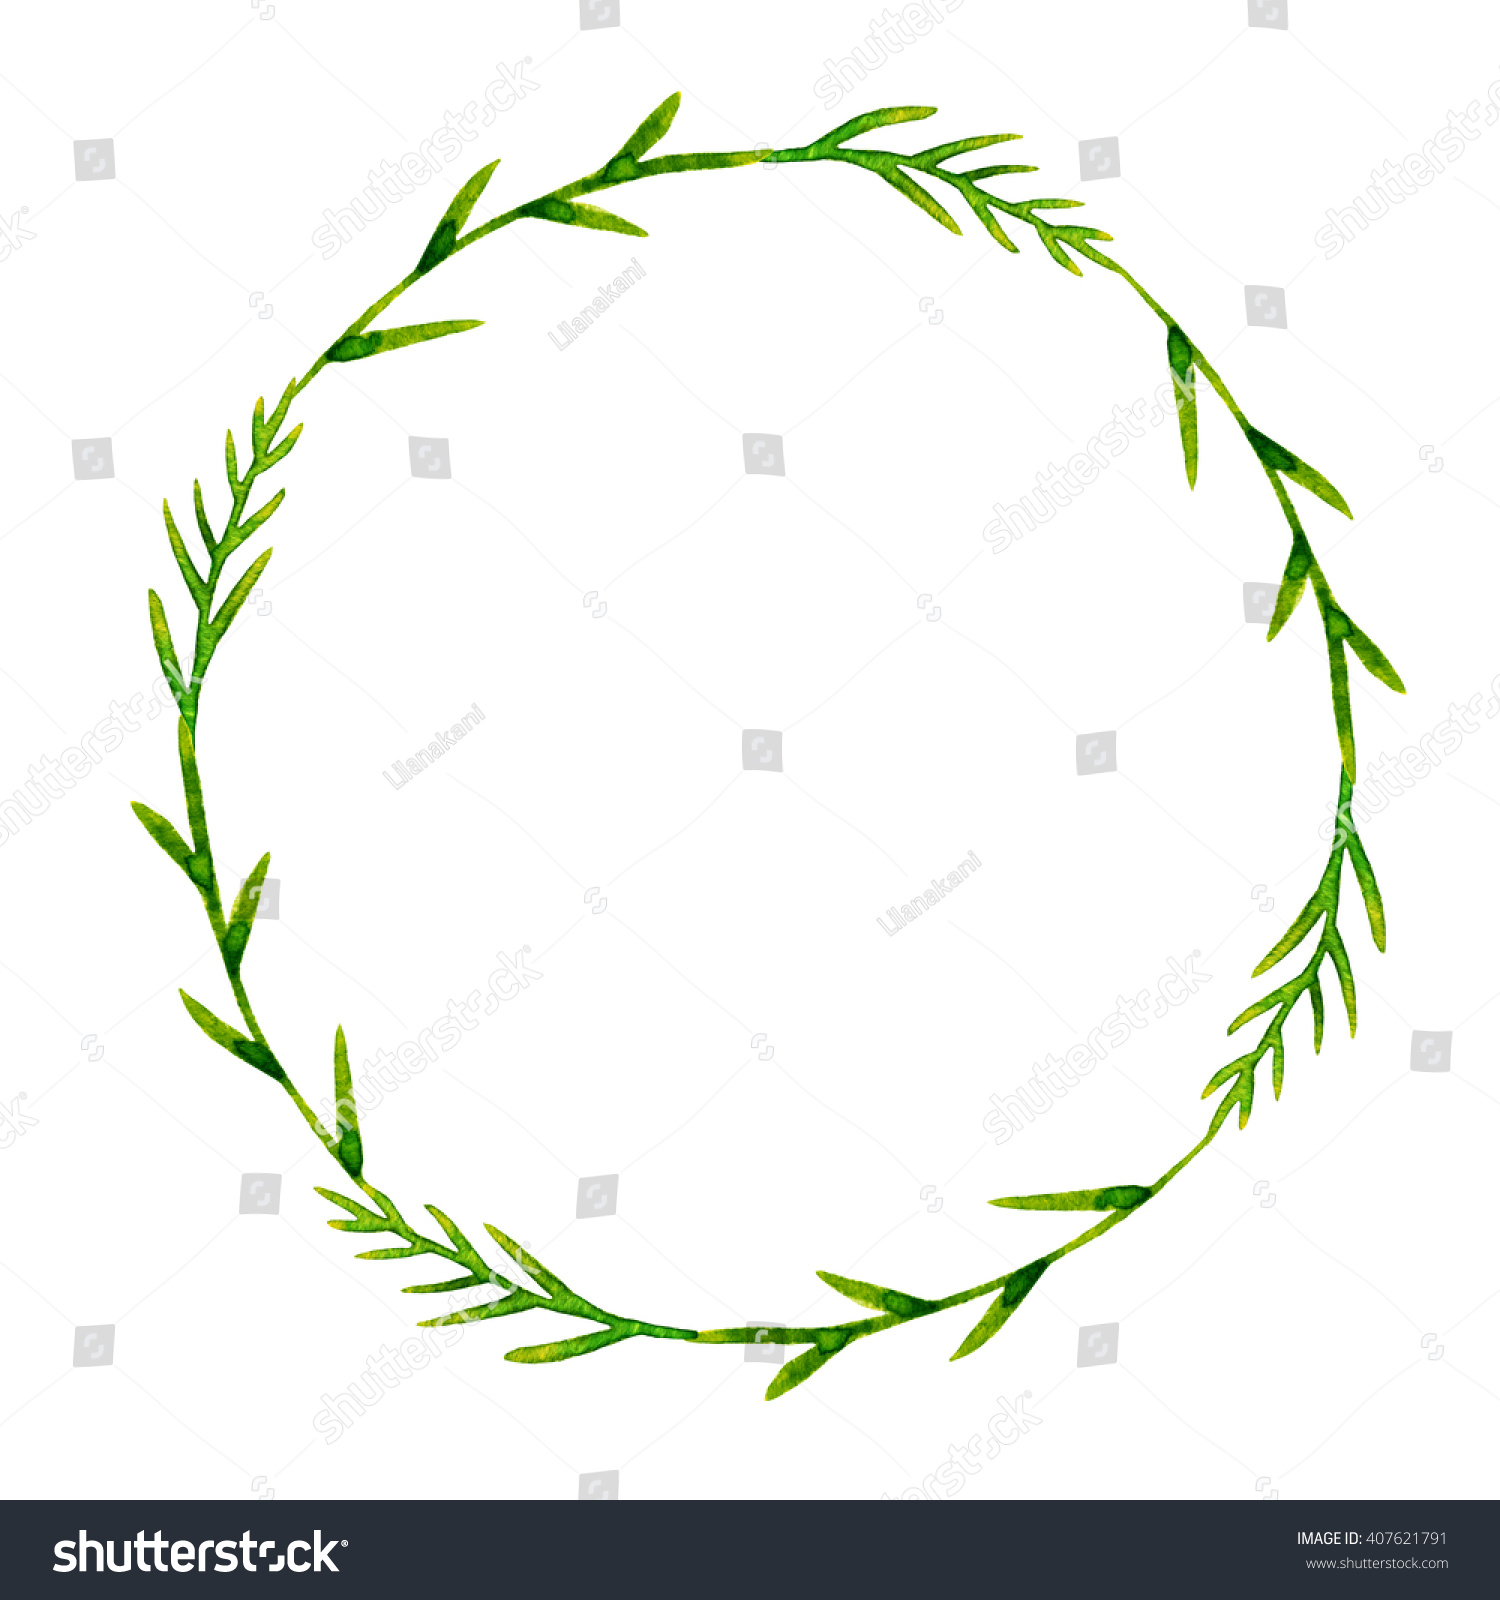 leaf circle clip art - photo #23